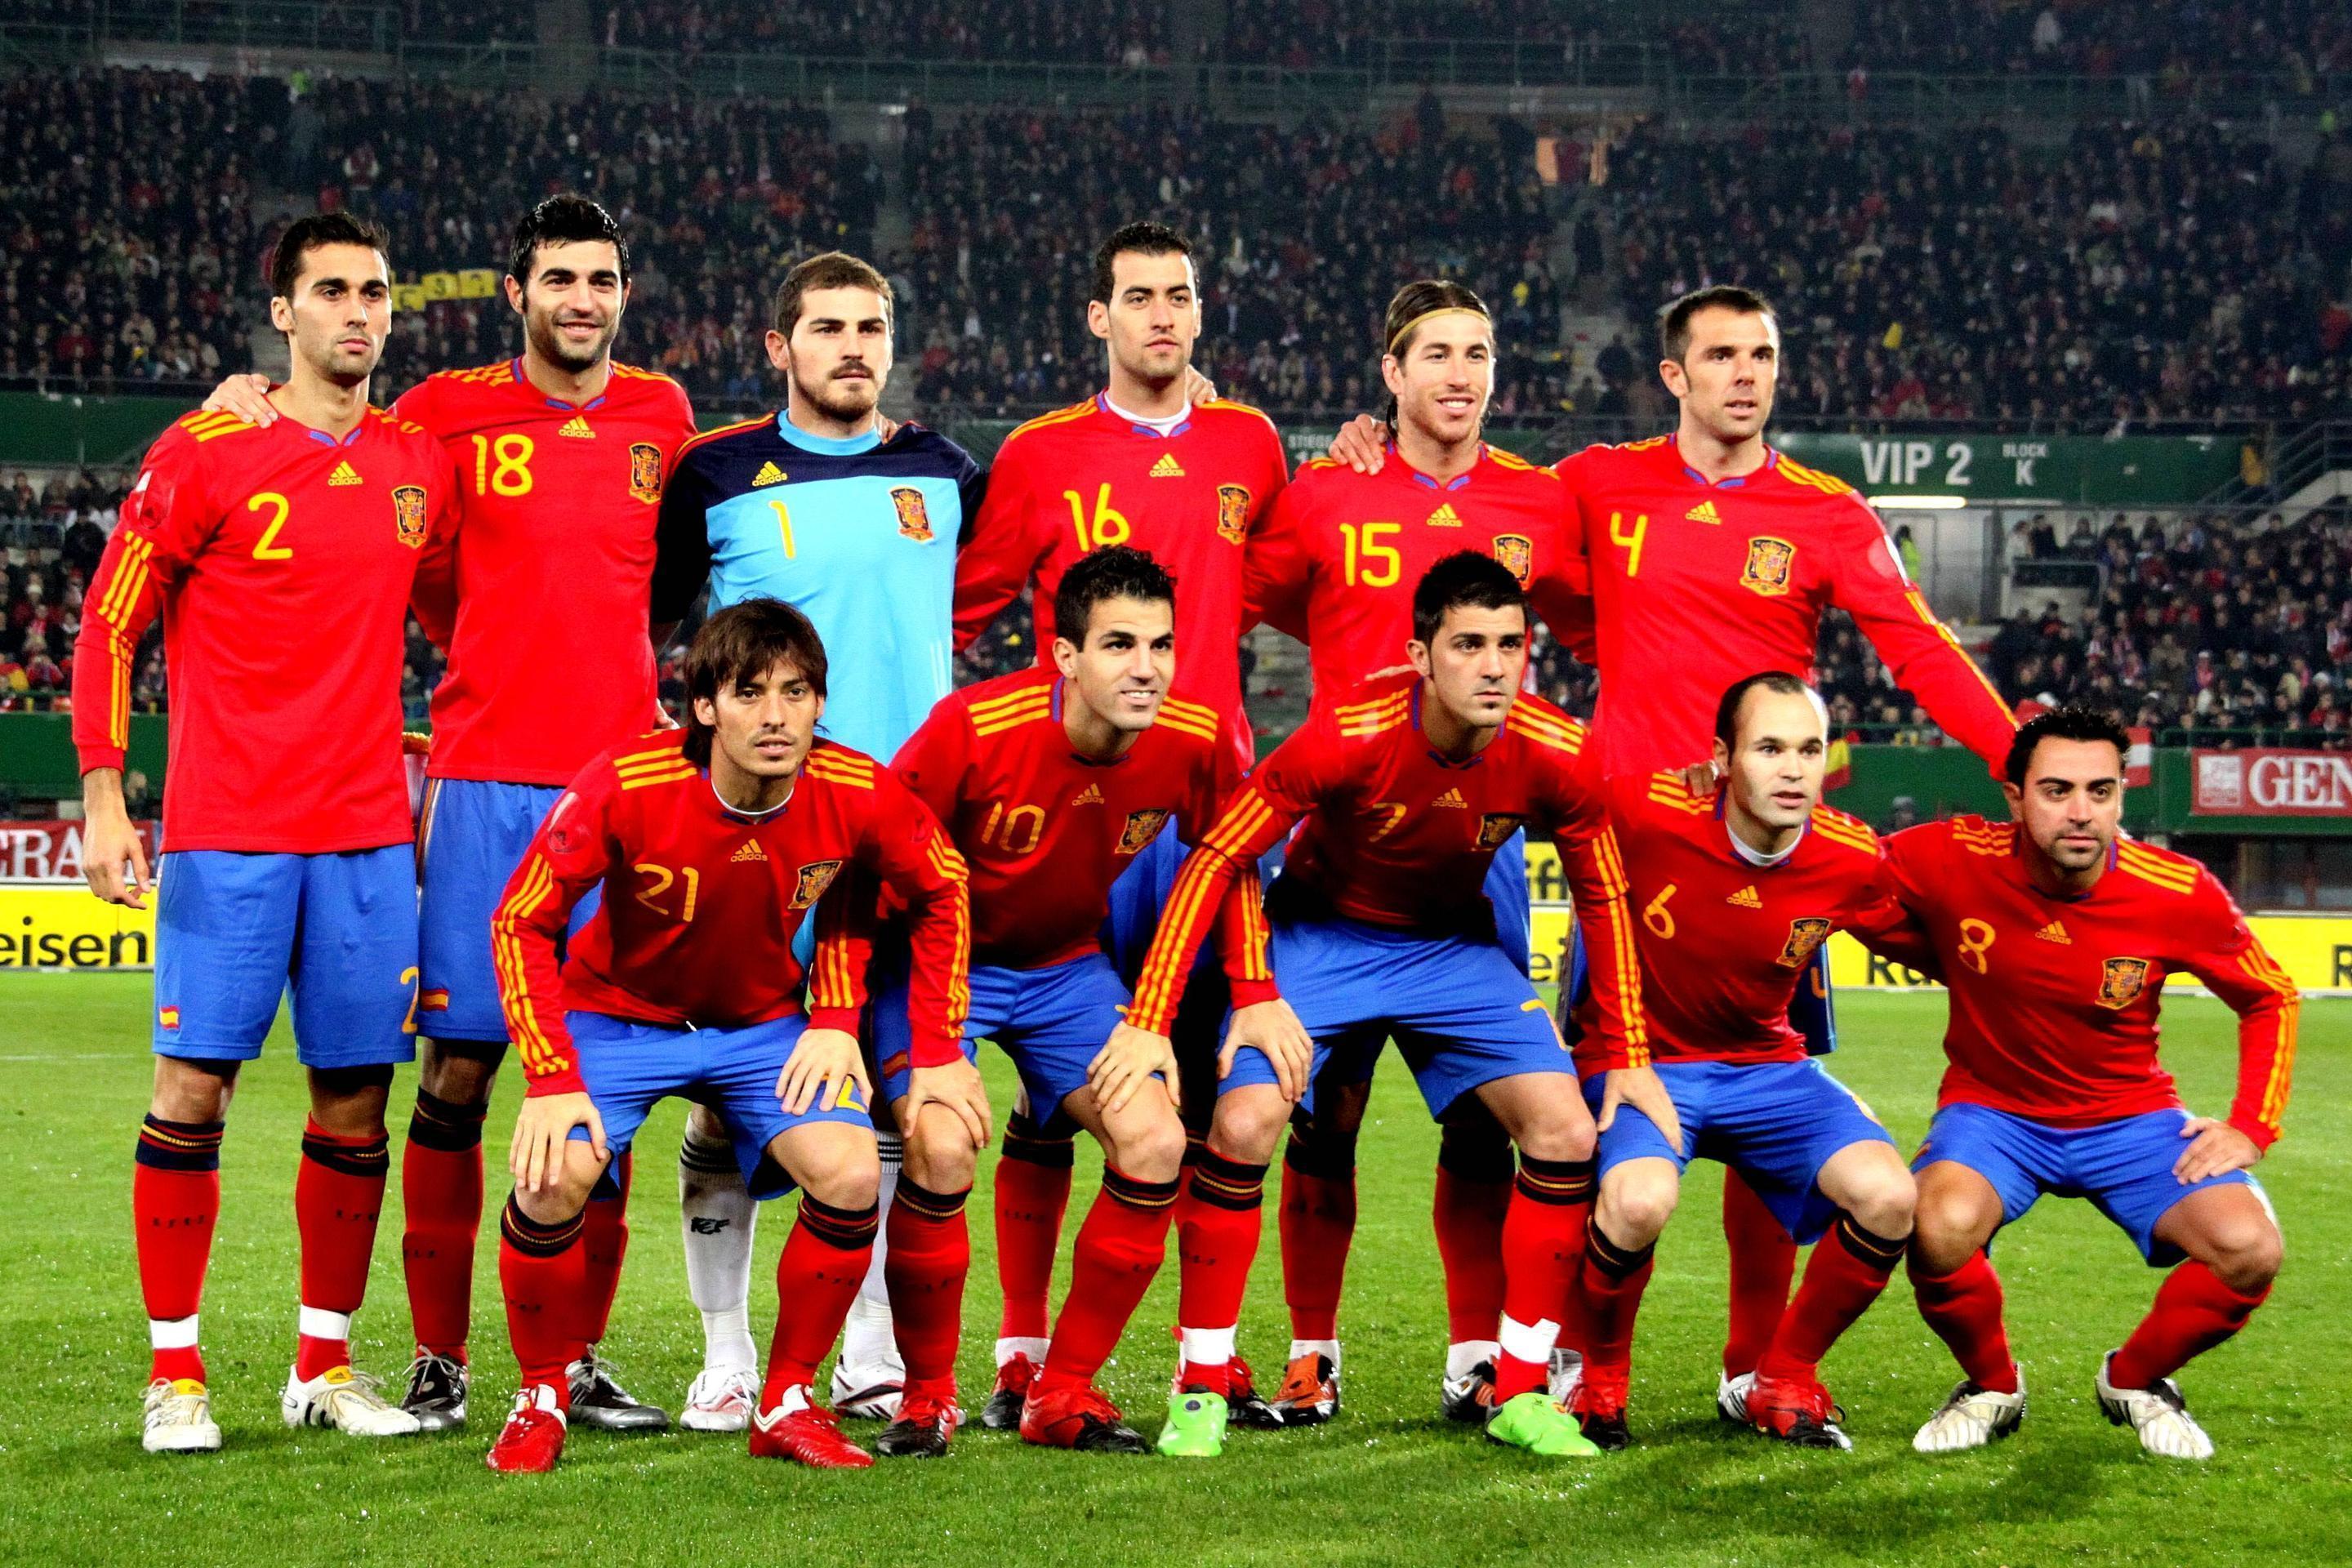 Spanish Football Team Images Soccer Team Spain Futbol Spains Espana